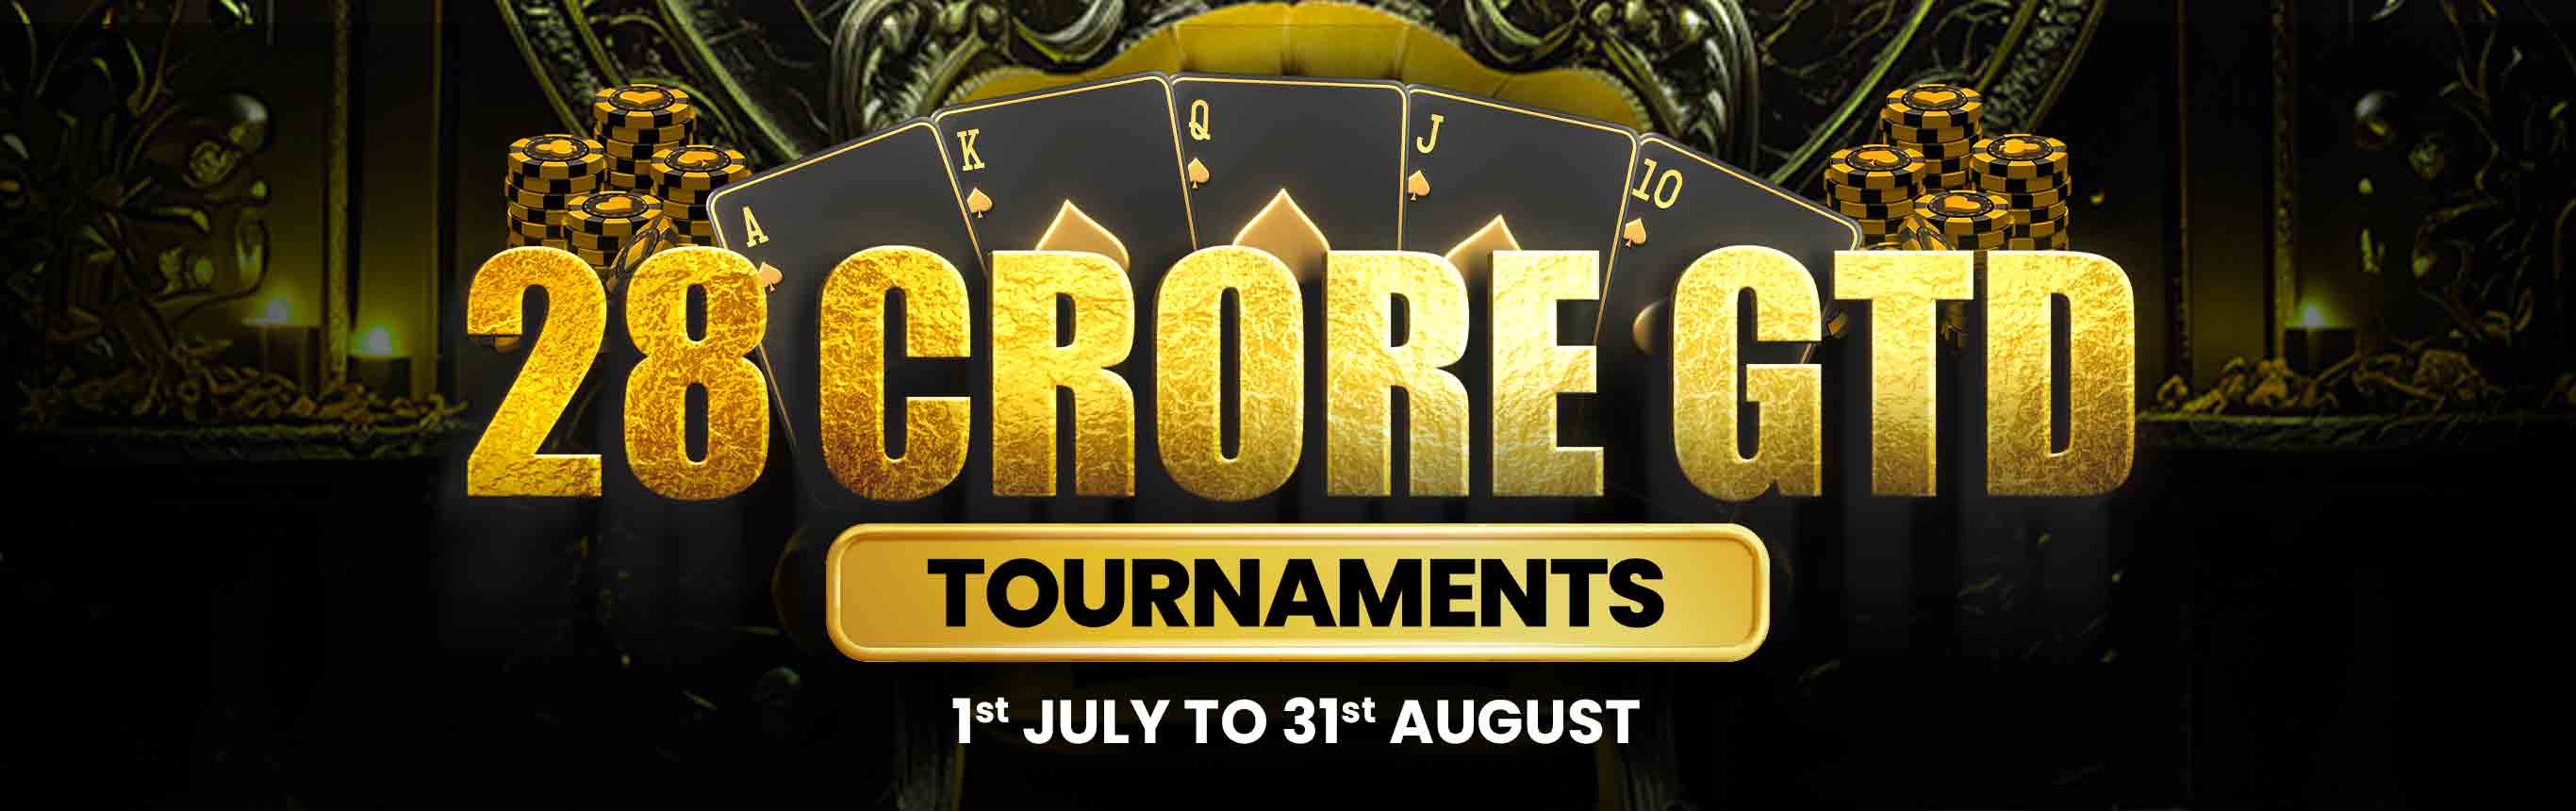 14 Crore GTD Tournament June 24